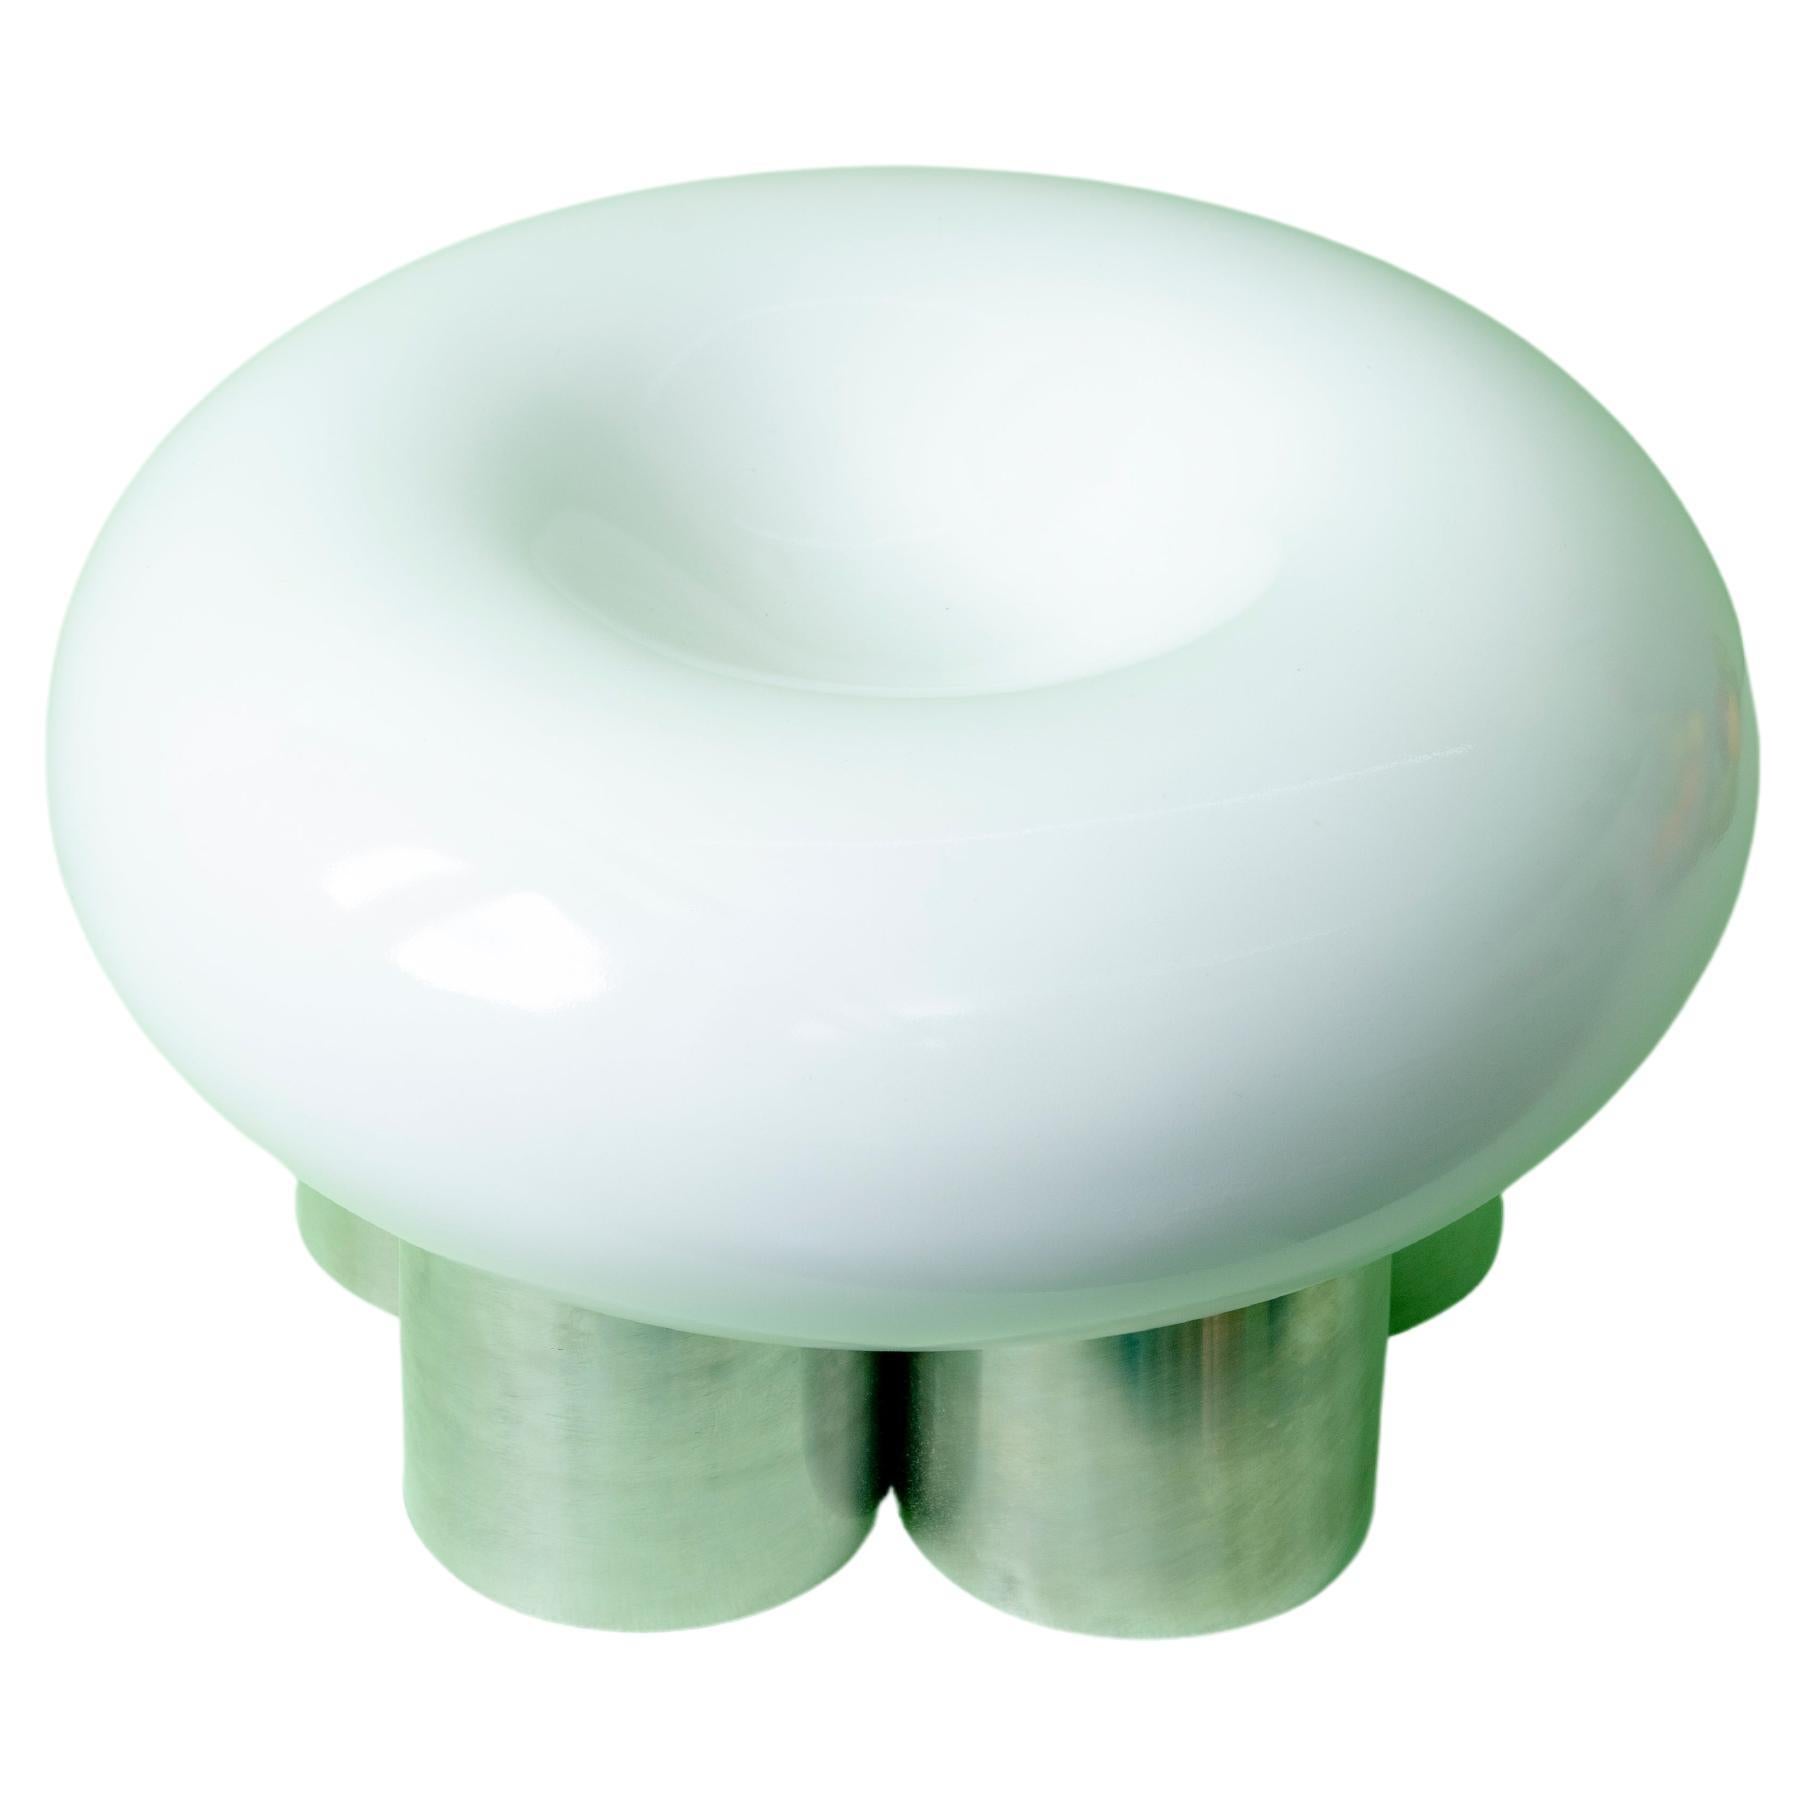 High Gloss Tabletop Minimal & Playful Cloud Vessel and Bowl